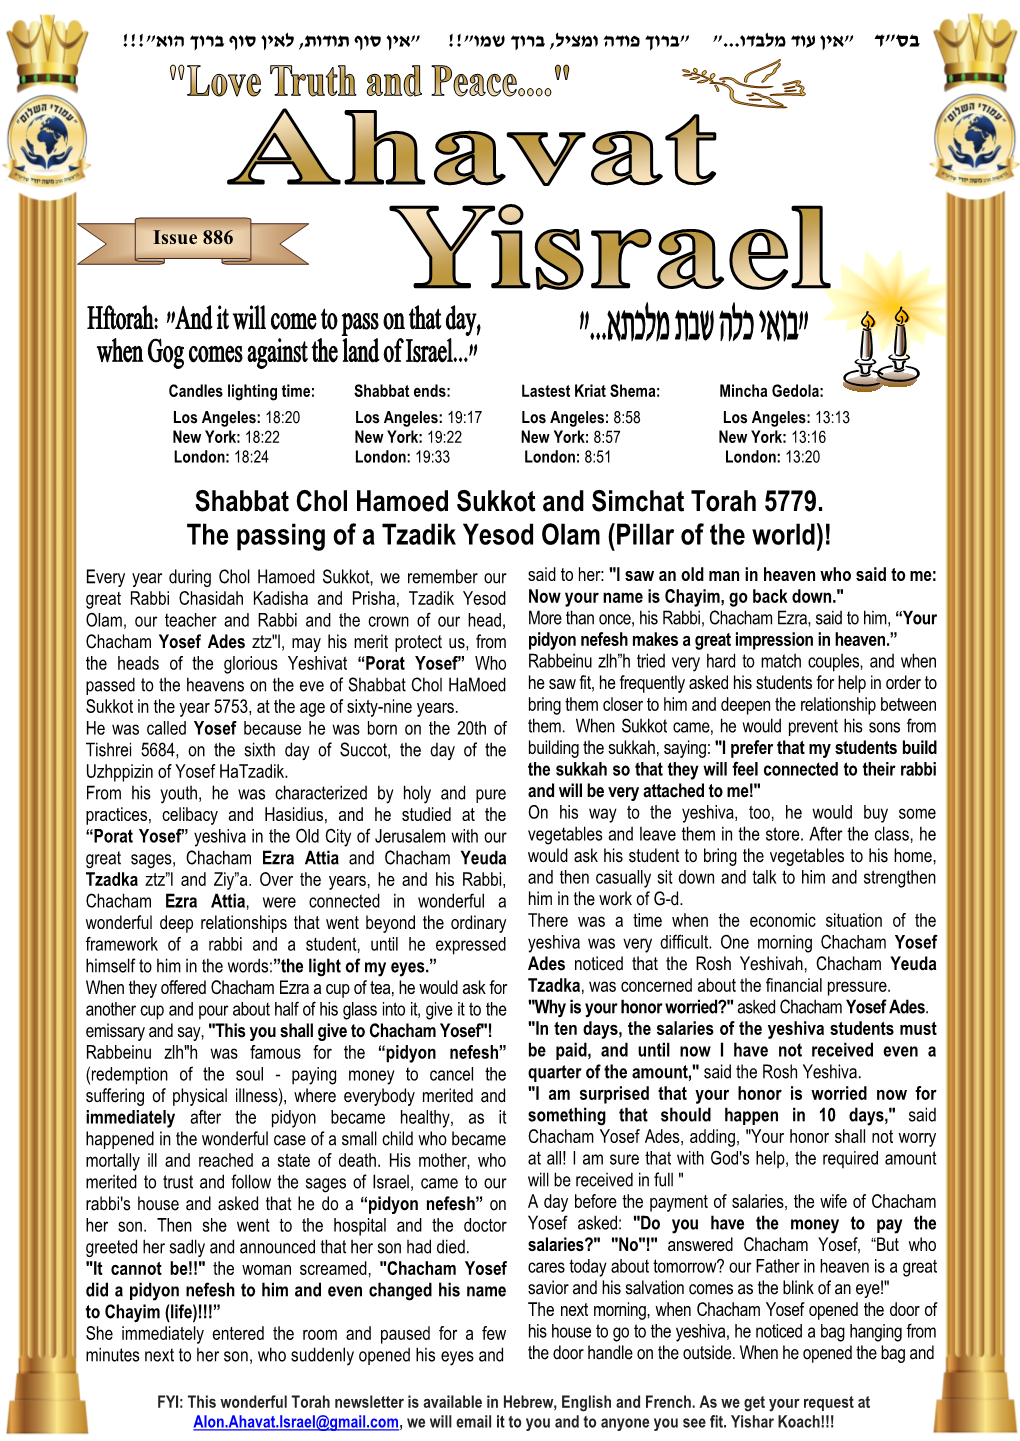 Shabbat Chol Hamoed Sukkot and Simchat Torah 5779. the Passing of a